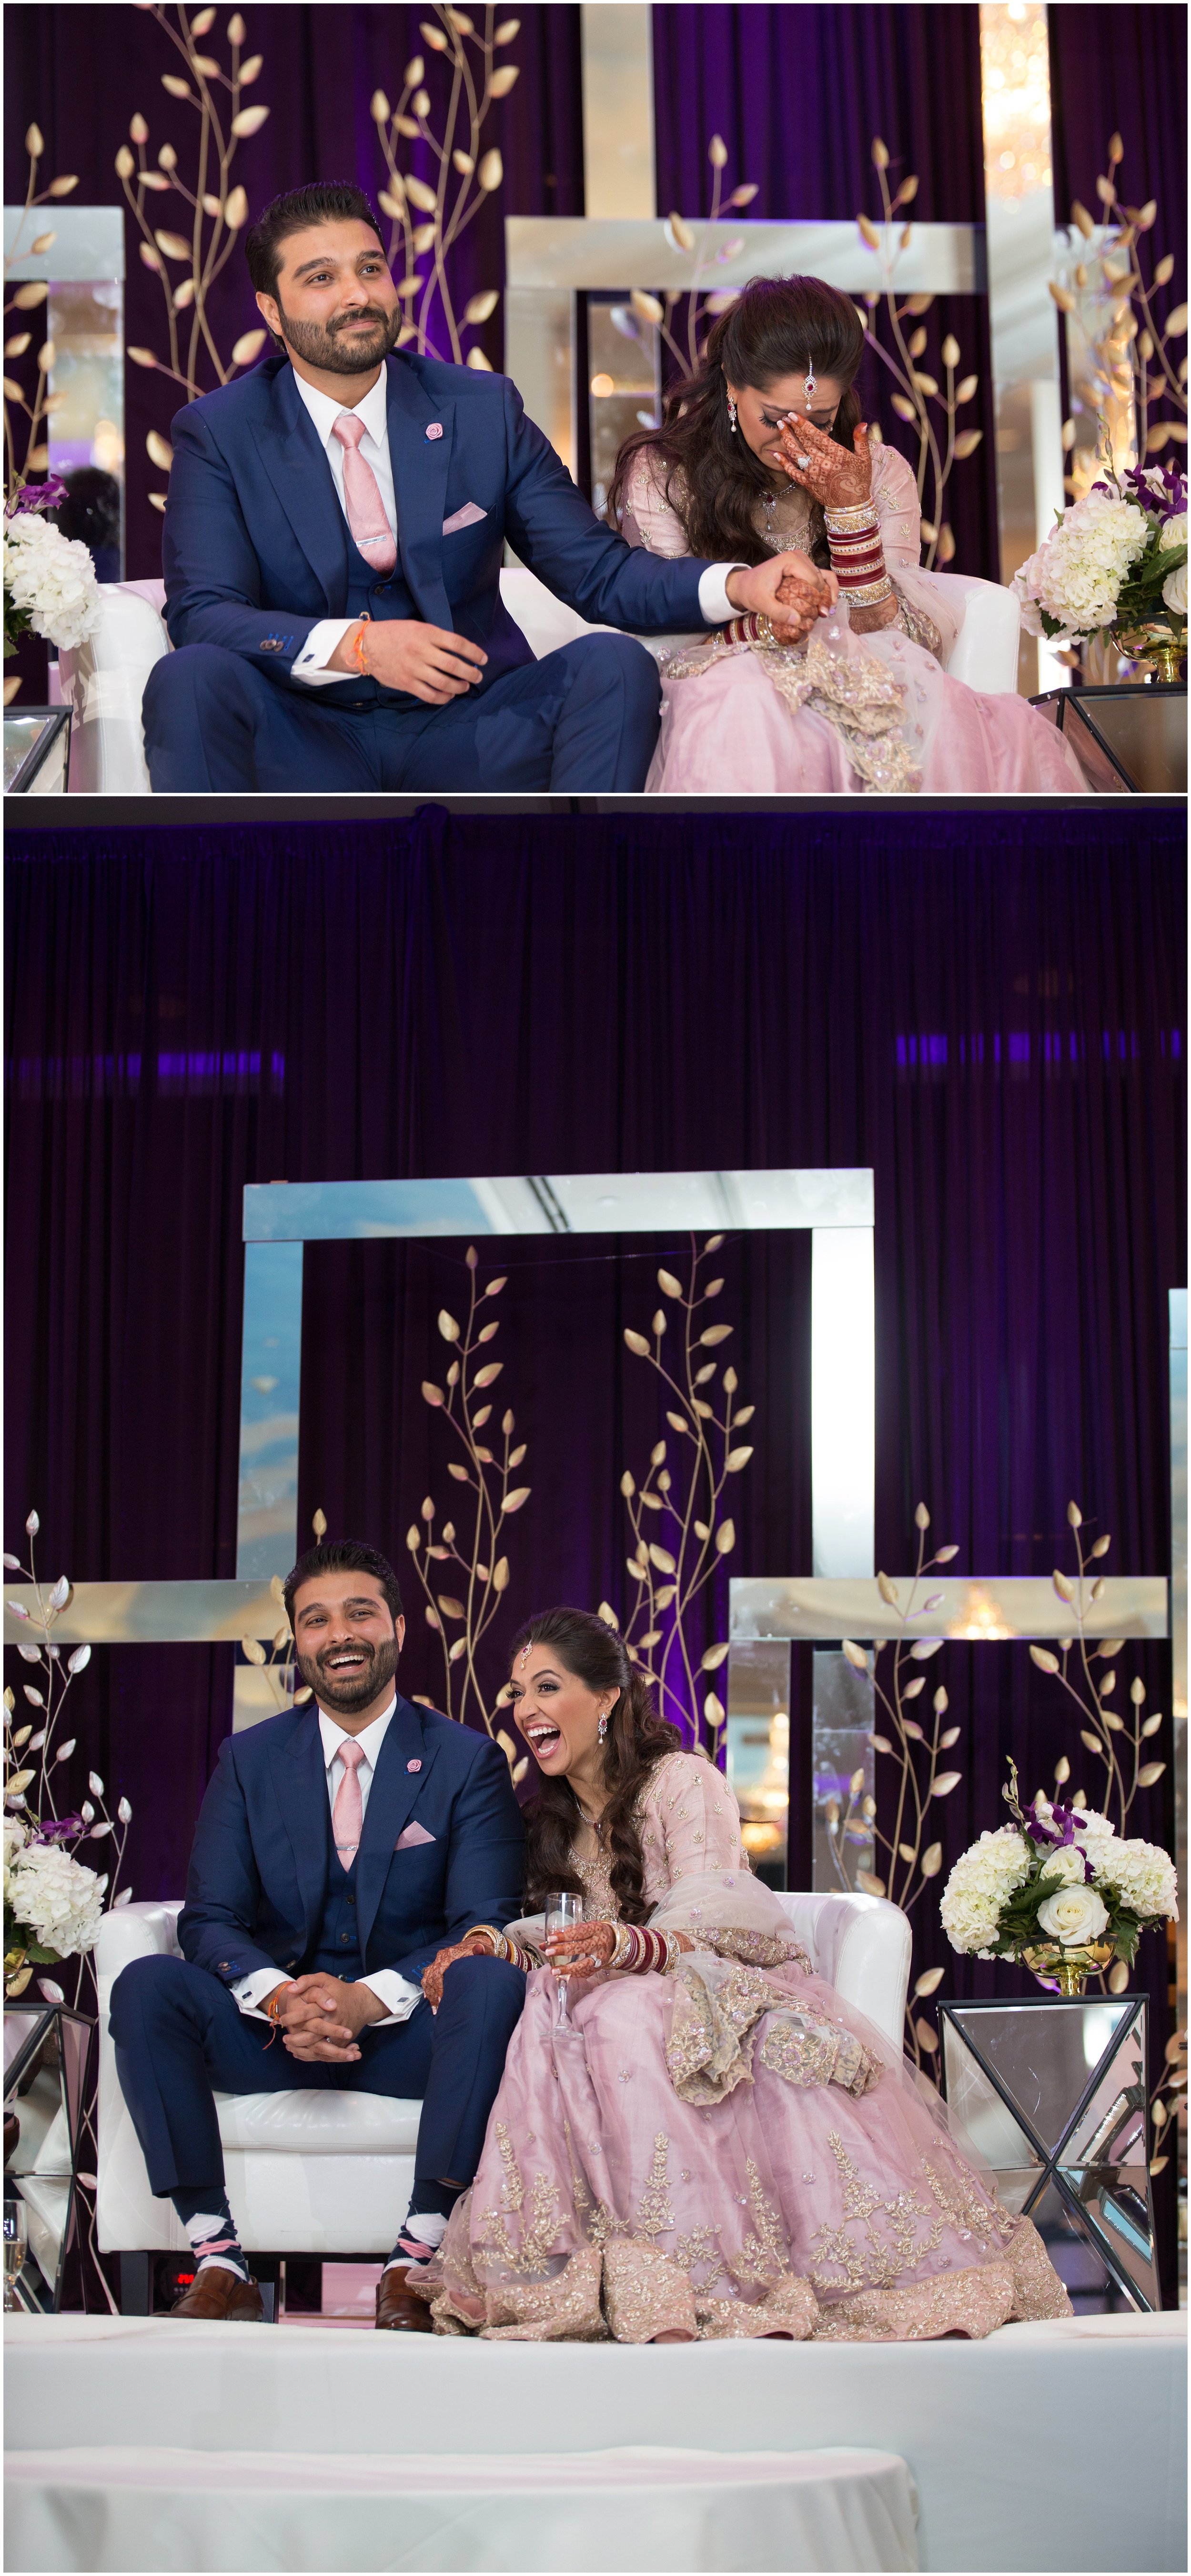 Le Cape Weddings - South Asian Wedding in Illinois - Tanvi and Anshul -2507_LuxuryDestinationPhotographer.jpg